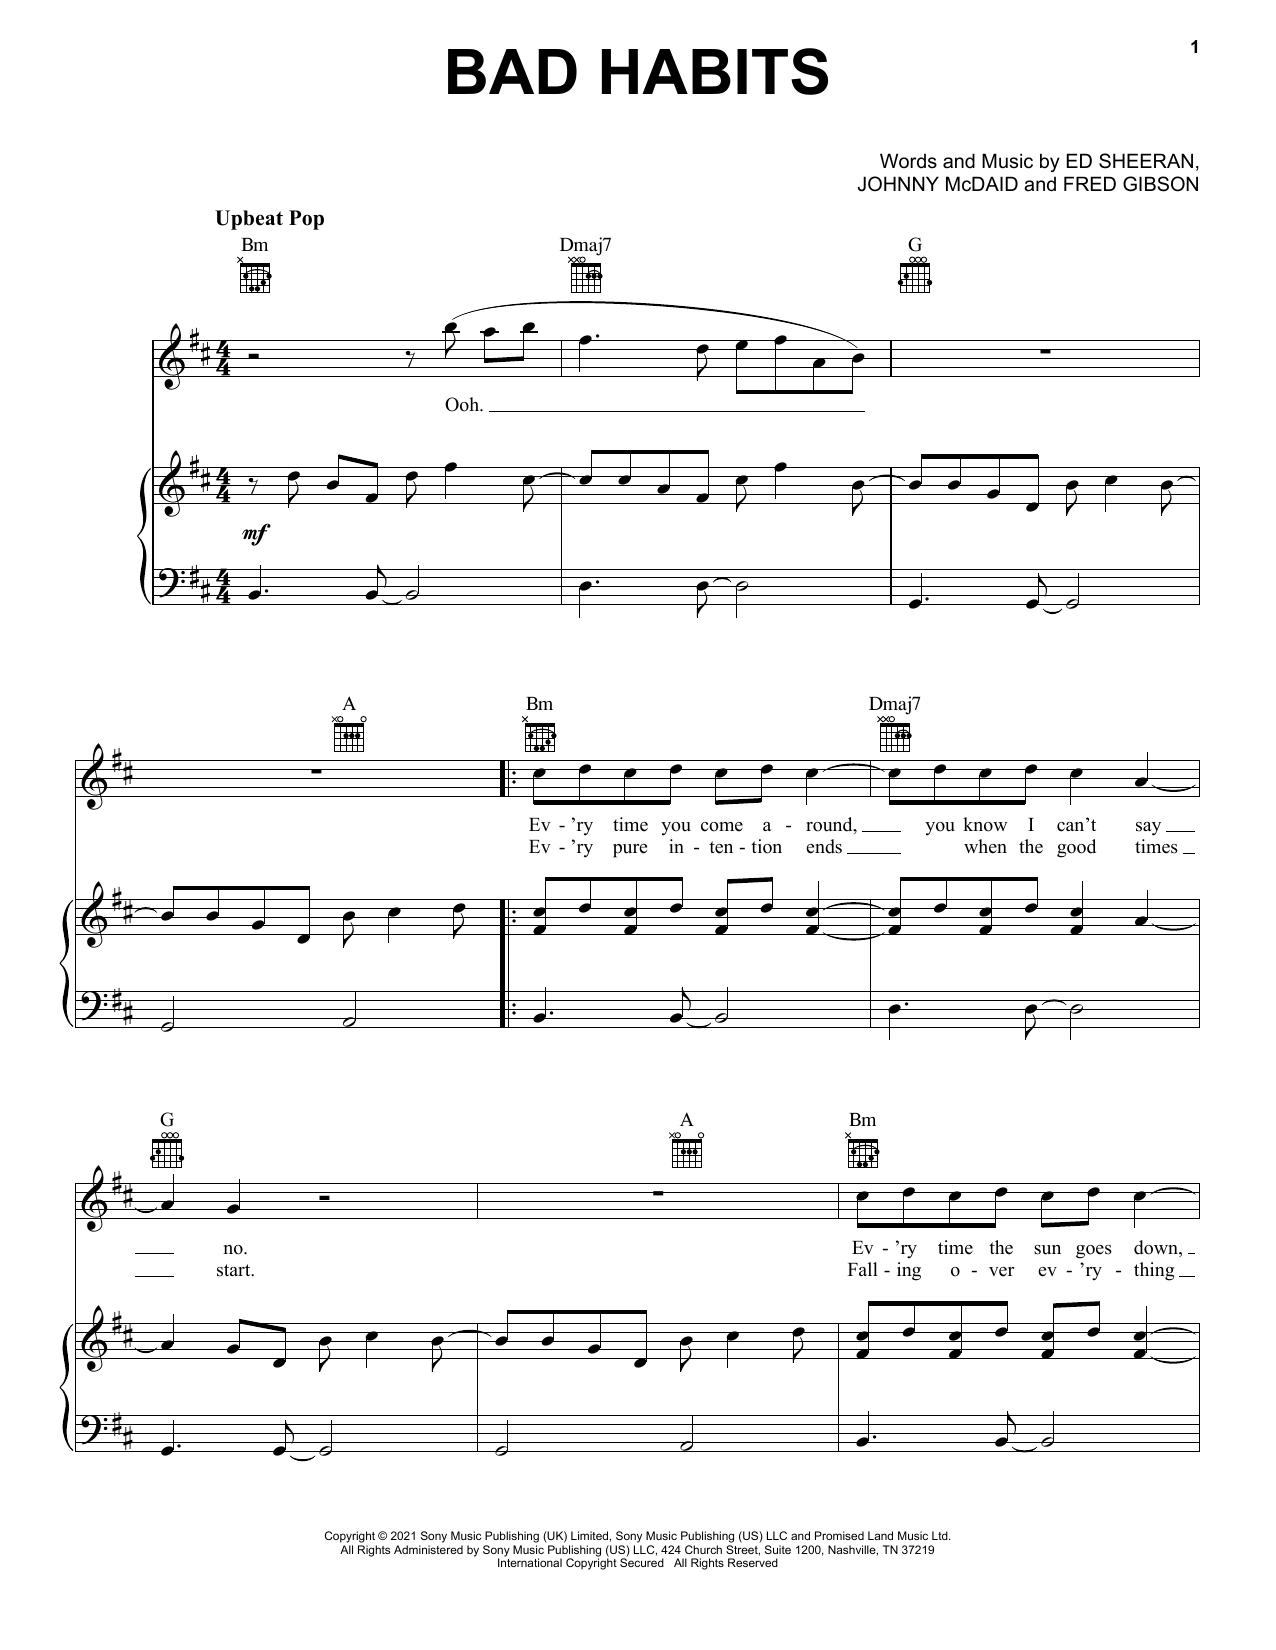 Ed Sheeran Bad Habits Sheet Music Notes & Chords for Trombone Duet - Download or Print PDF